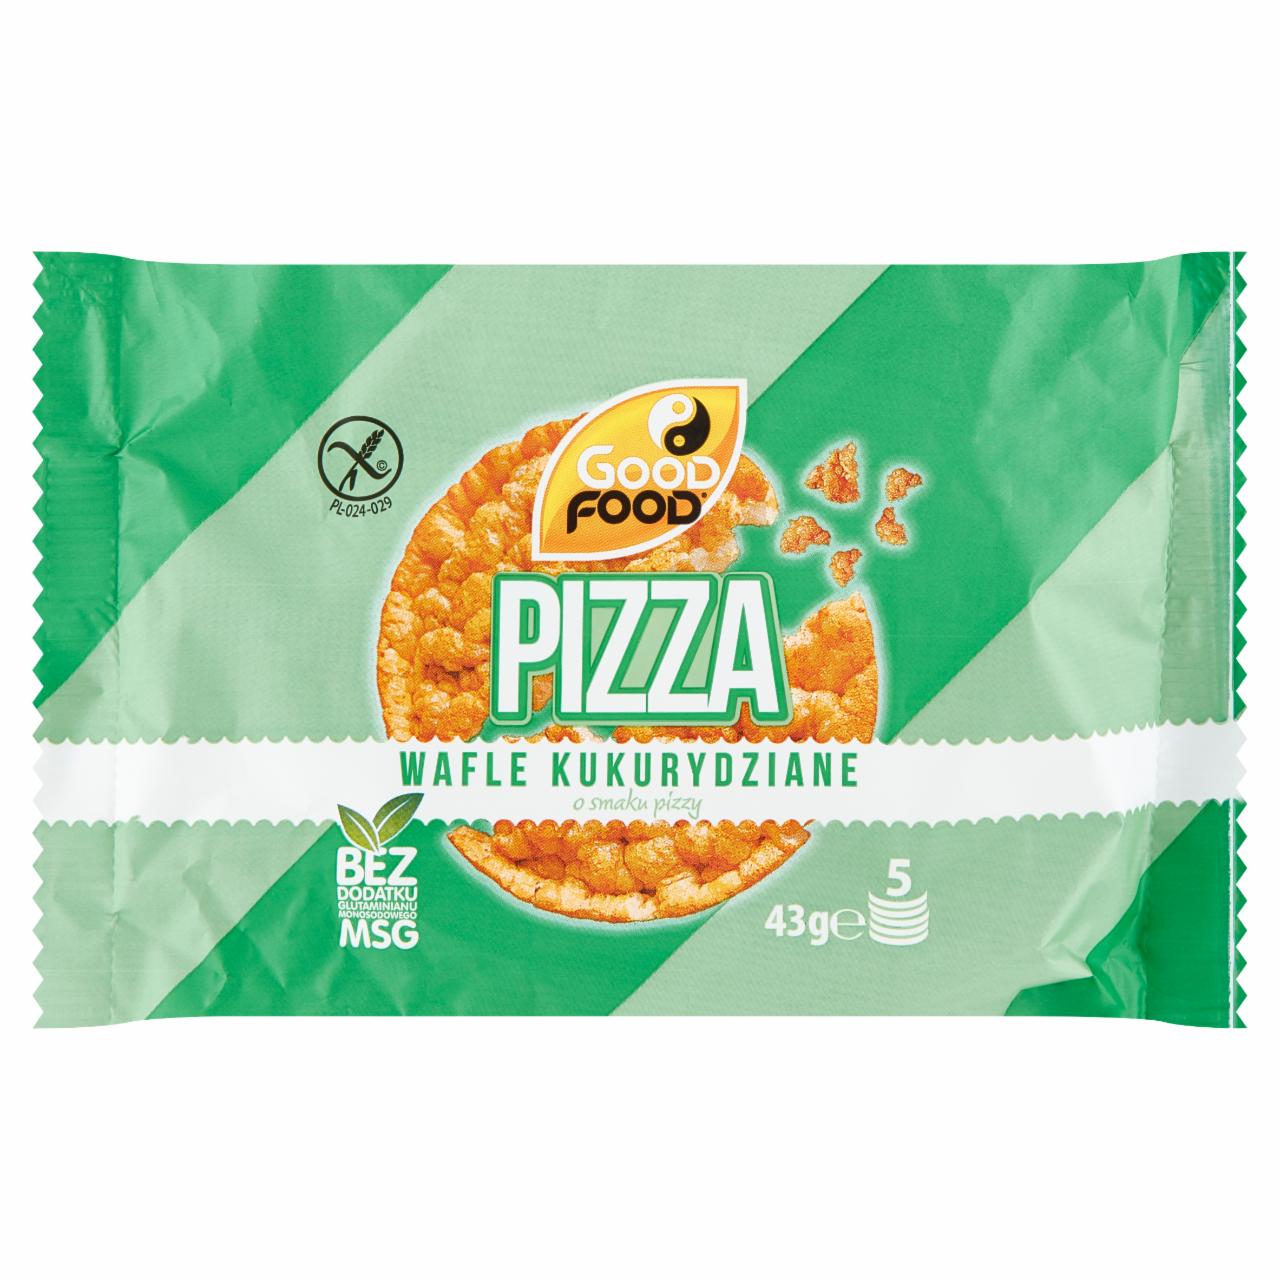 Fotografie - Good Food pizza wafle